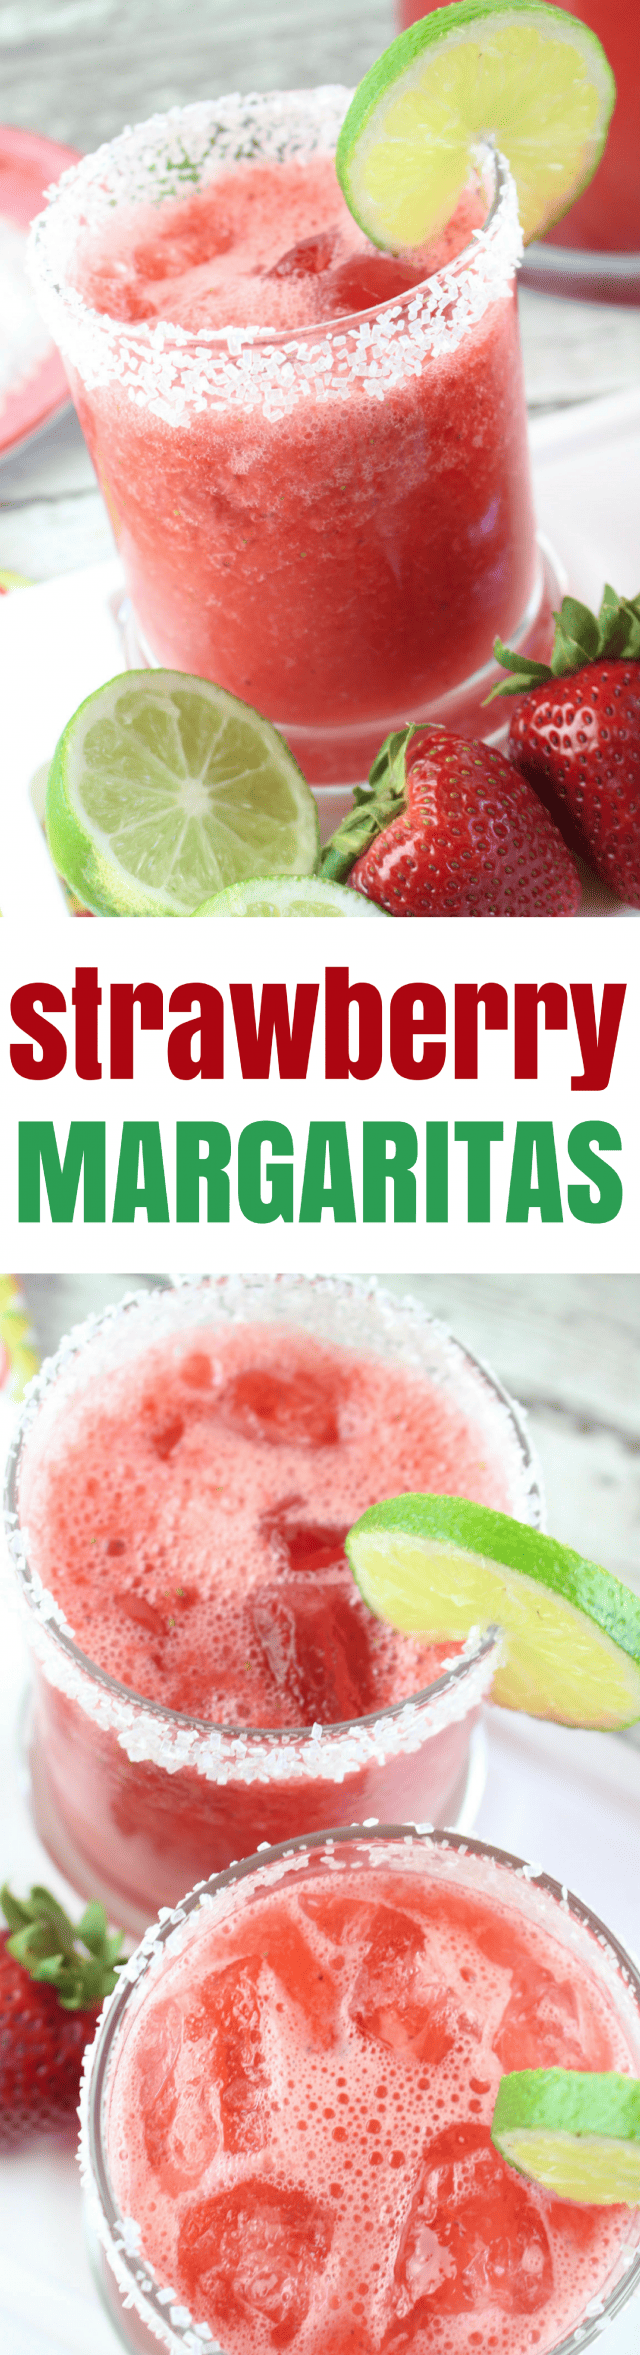 Strawberry Margarita Punch Drink Recipe